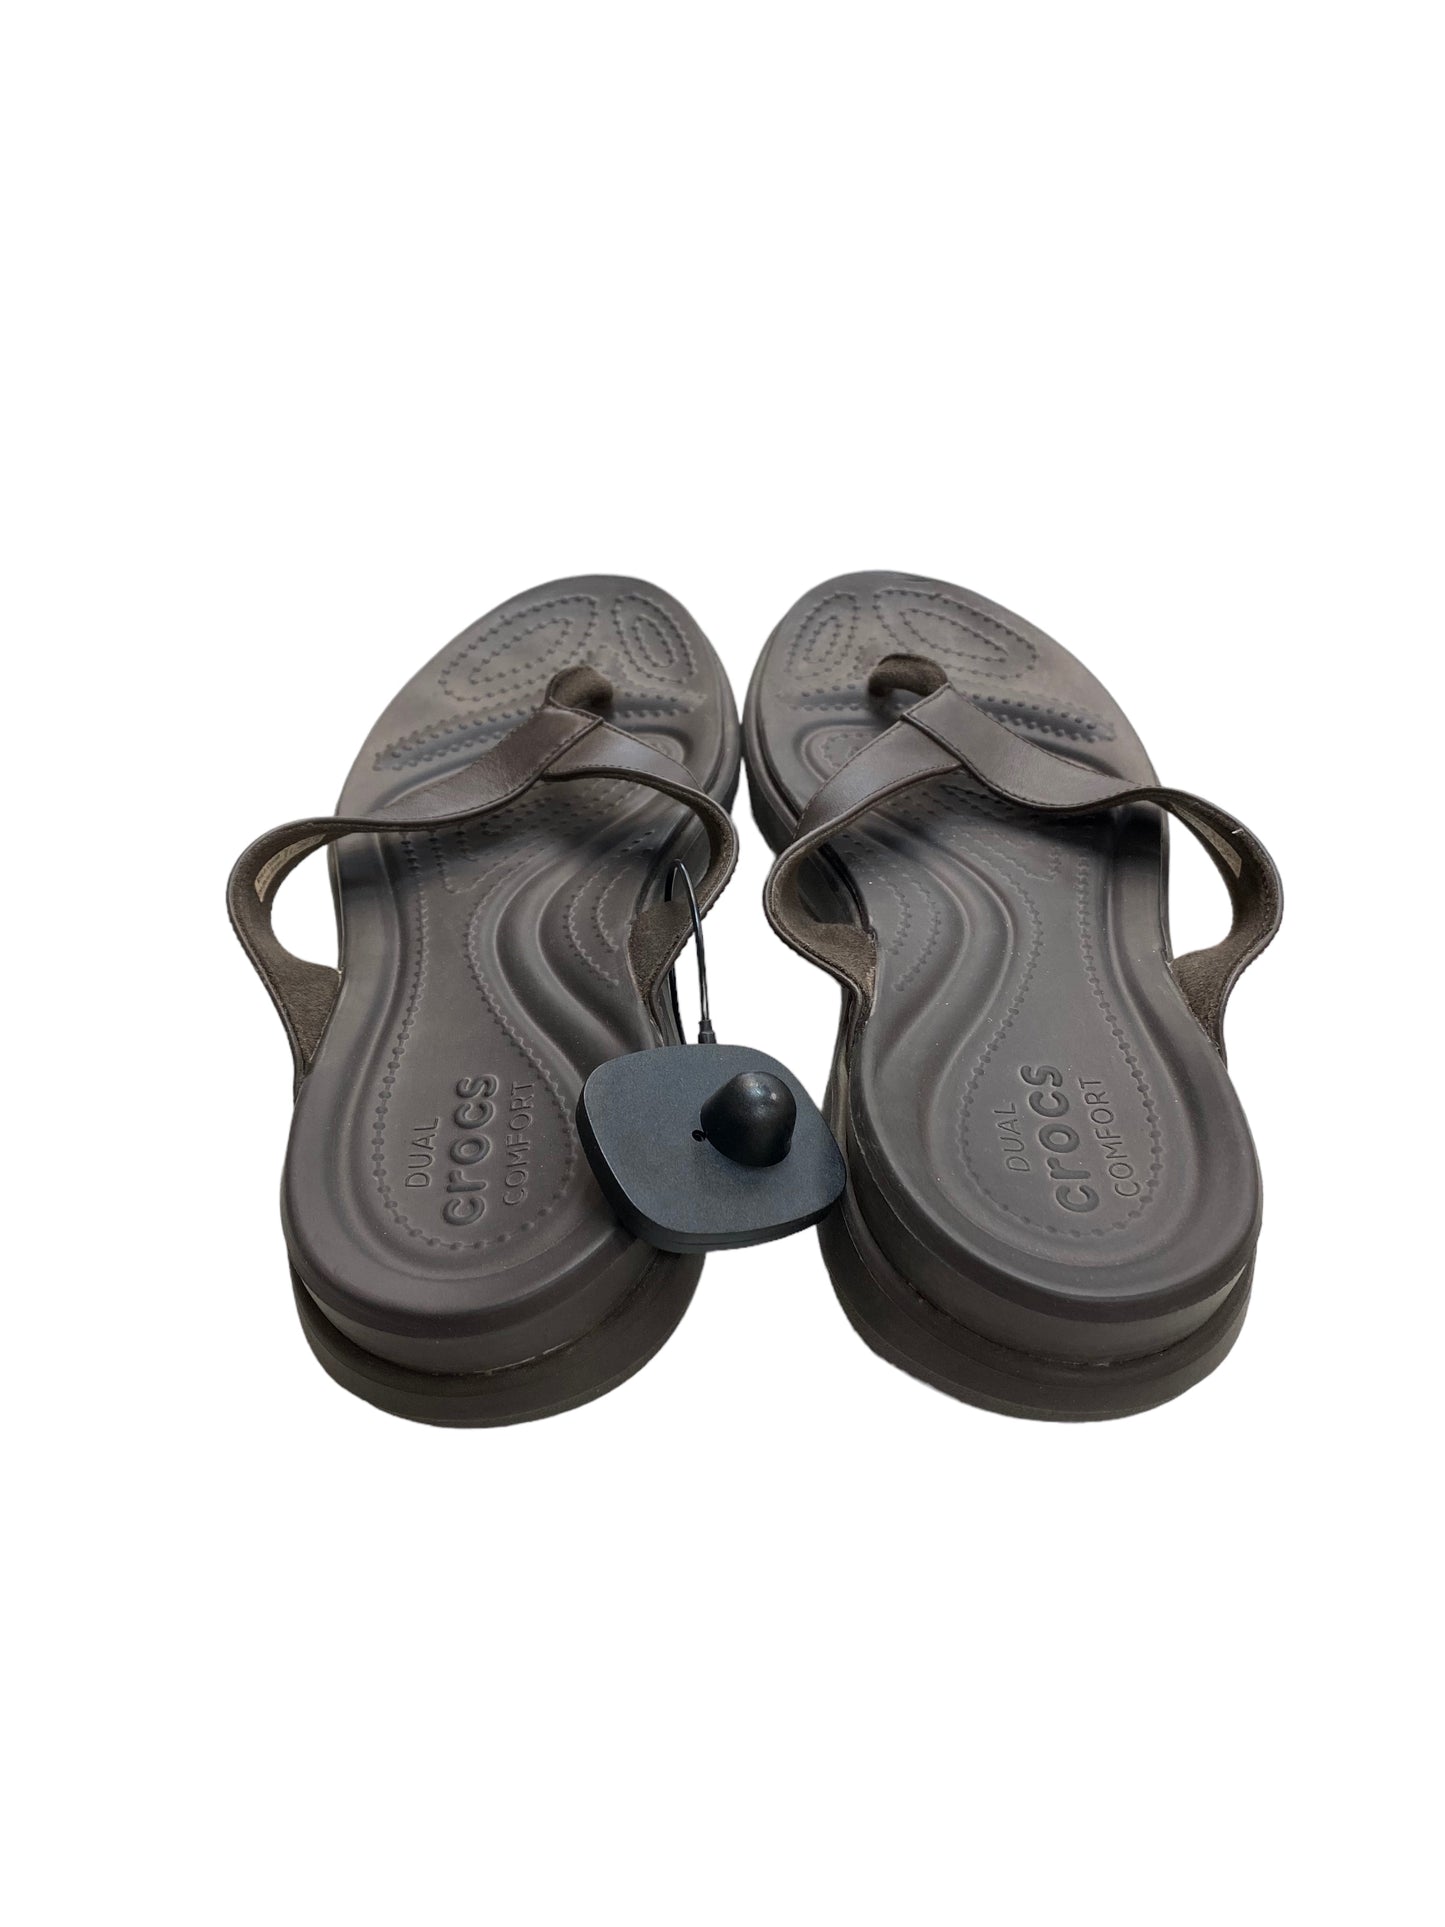 Brown Sandals Flip Flops Crocs, Size 10